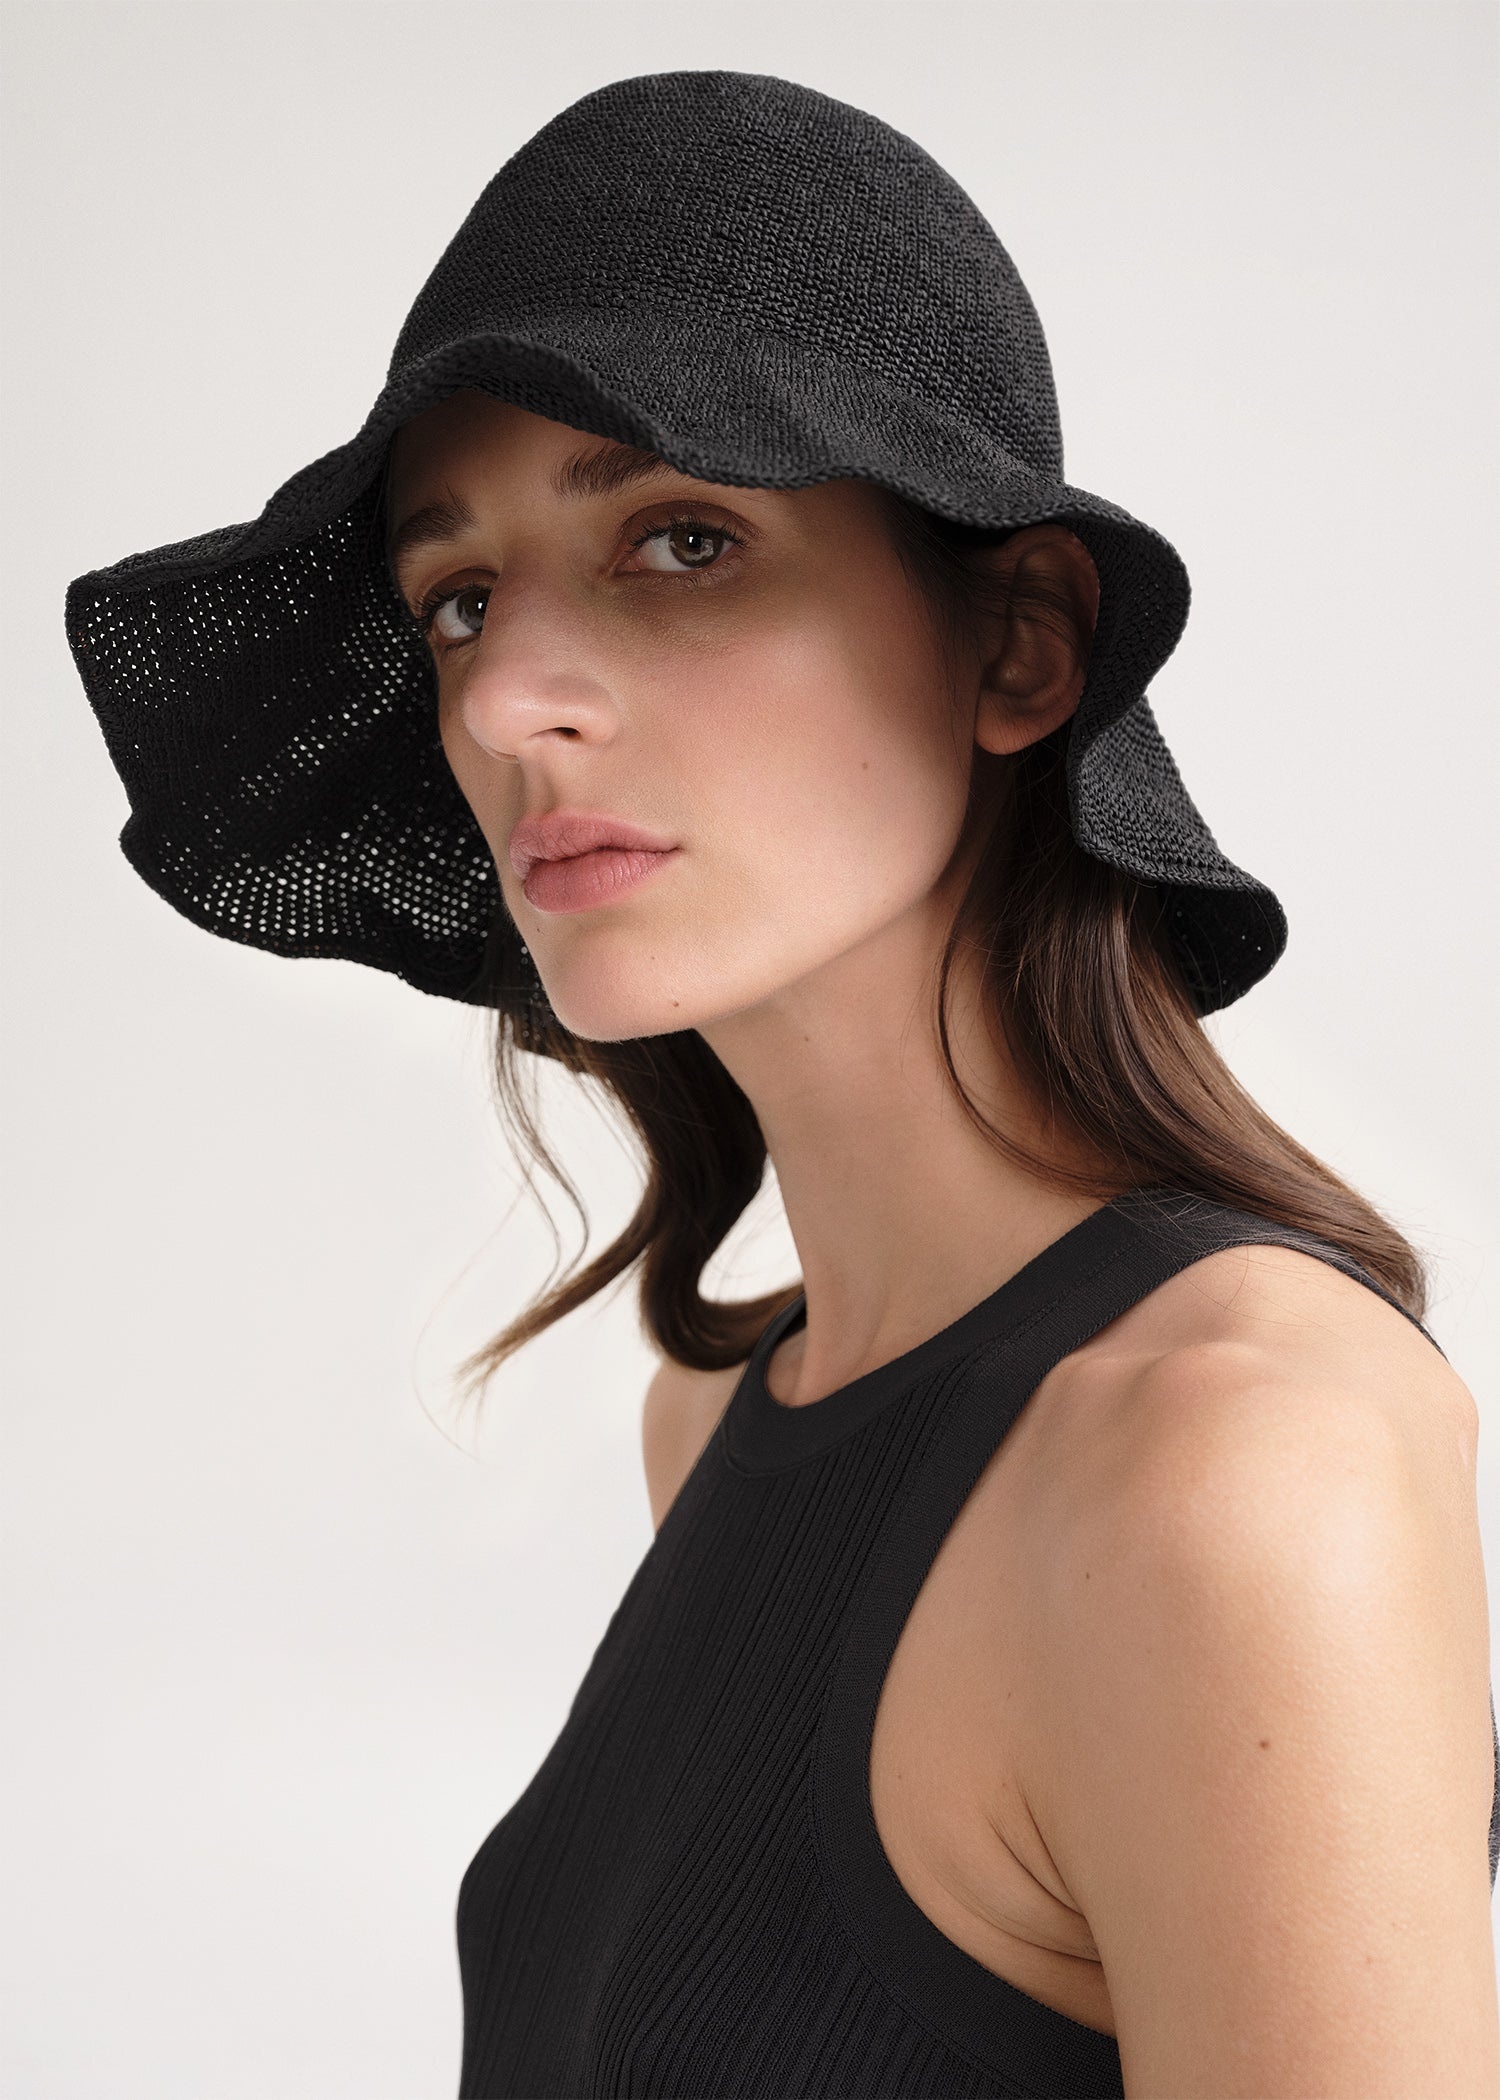 Paper straw hat black - 2